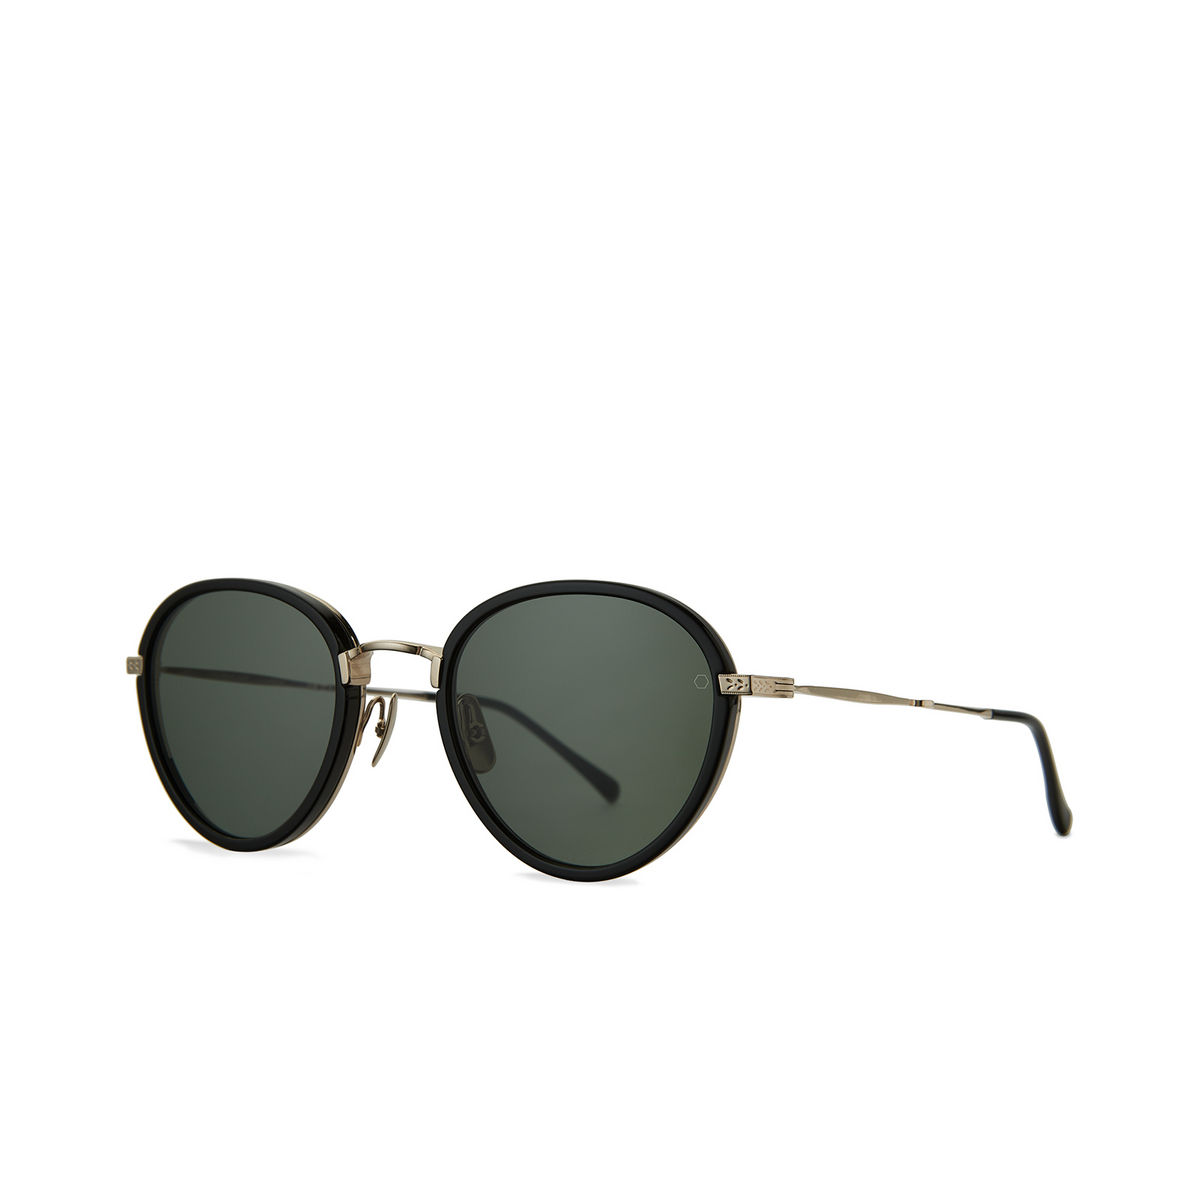 Mr. Leight® Round Sunglasses: Monterey Sl color Matte Black / G15 + Ash / Bluelight MBK/G15+ASH/BLUL - three-quarters view.